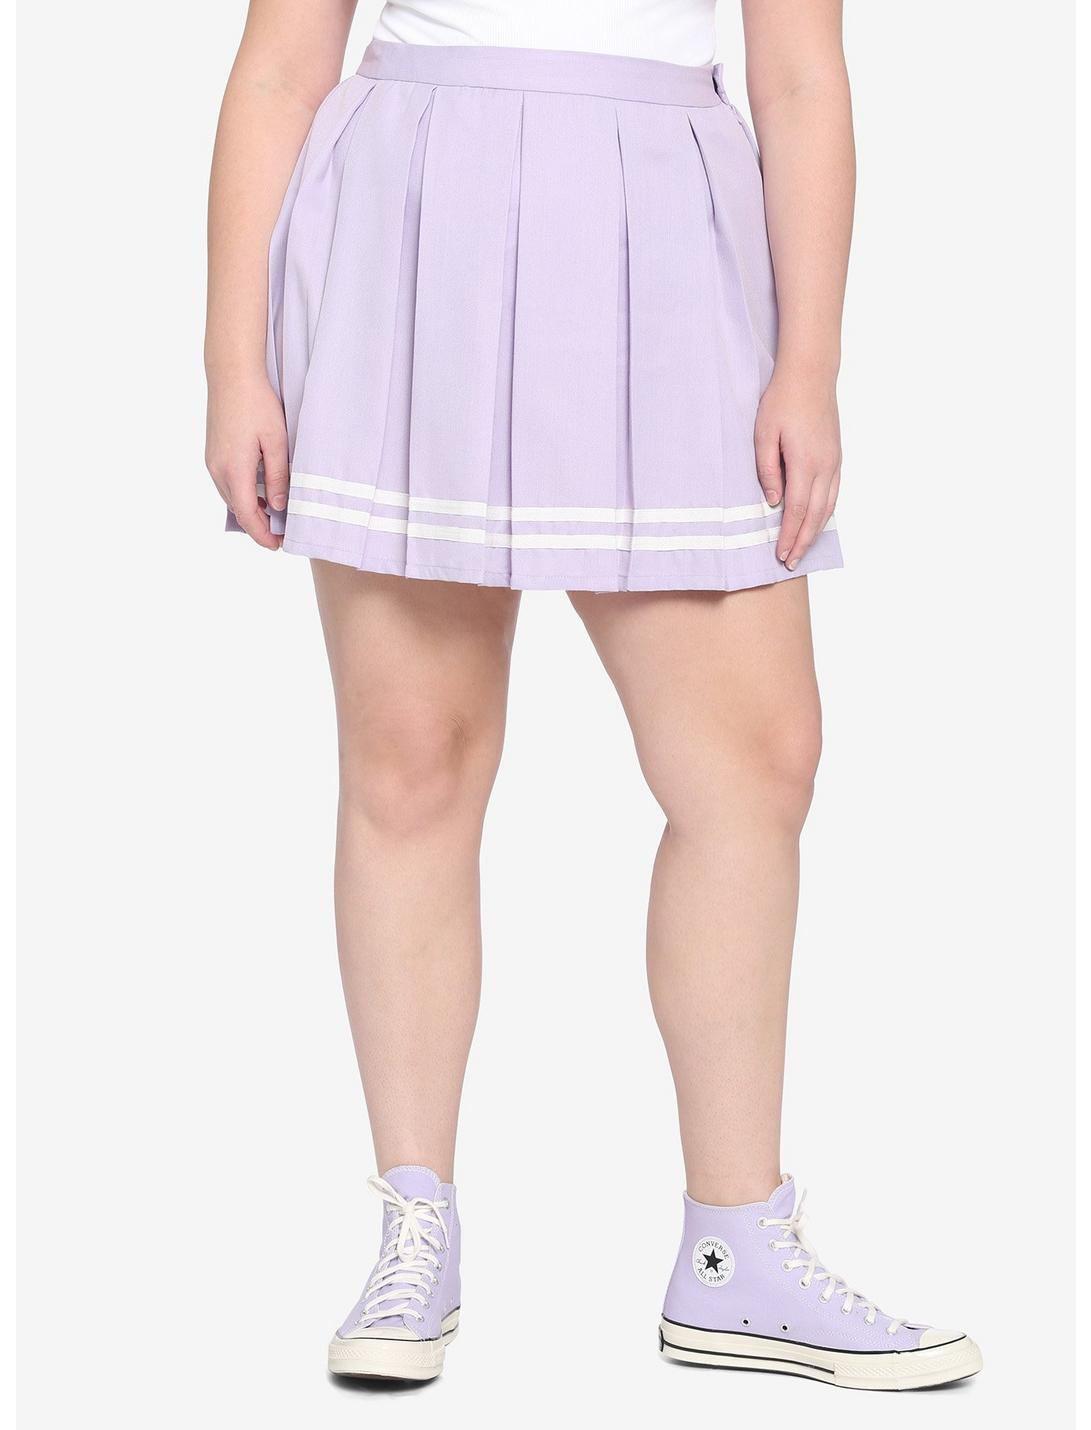 Lavender Pleated Cheer Skirt Plus Size, LAVENDER, hi-res